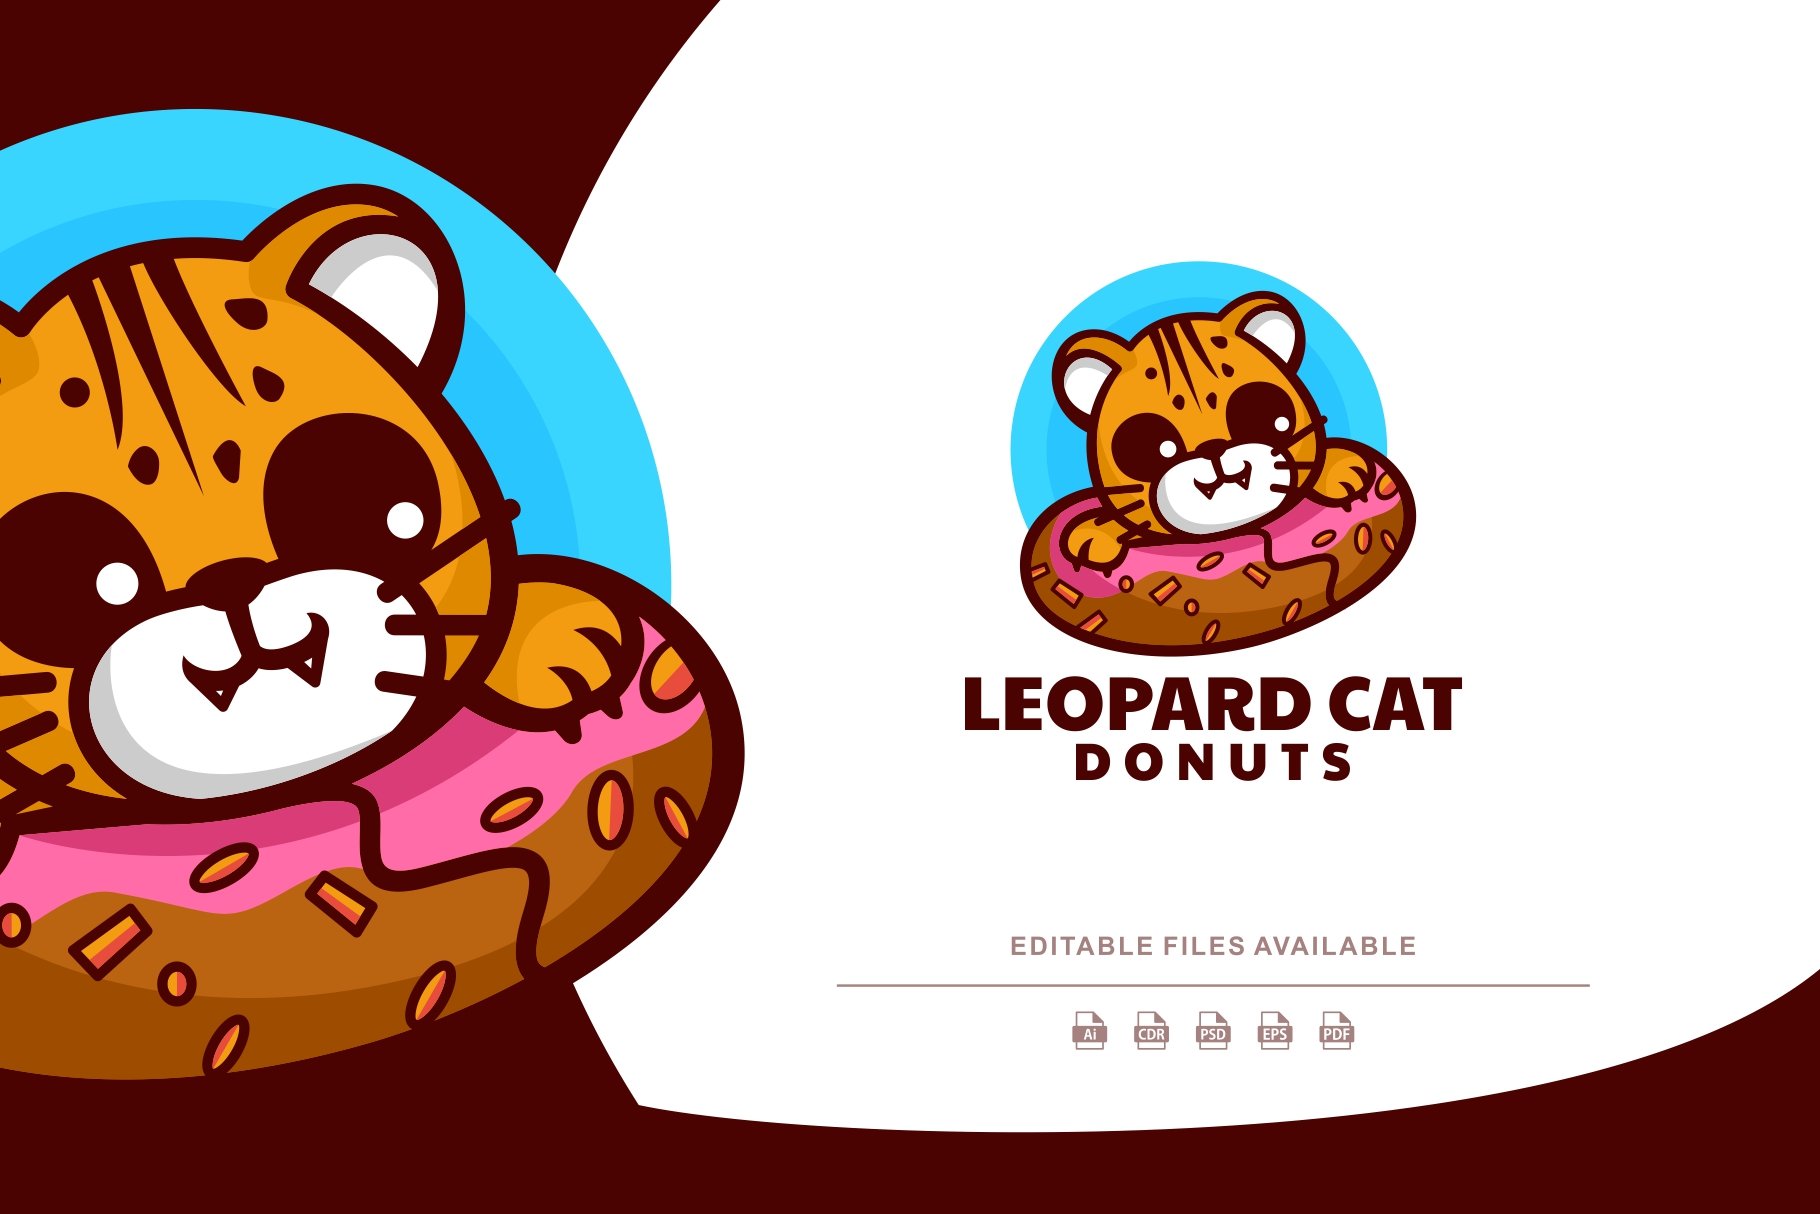 Leopard Doughnut Cartoon Logo cover image.